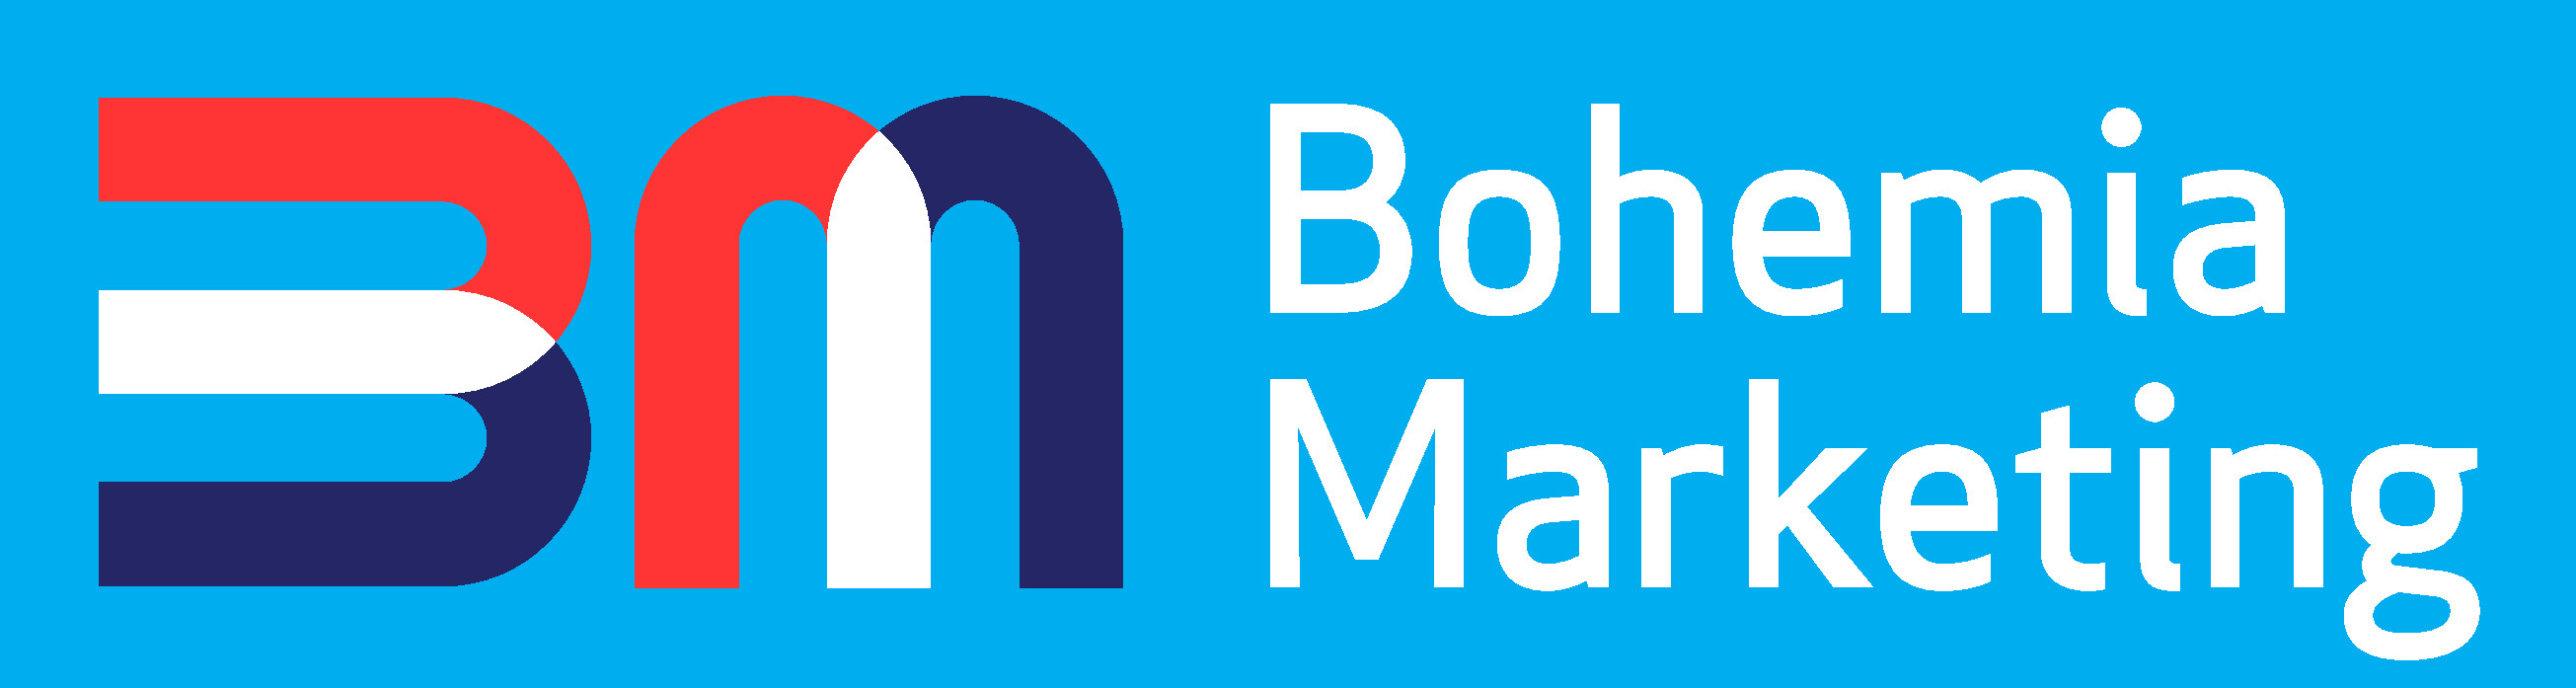 Bomark - Bohemia Marketing - Velkoobchod cukrovinek Ostrava – Poruba